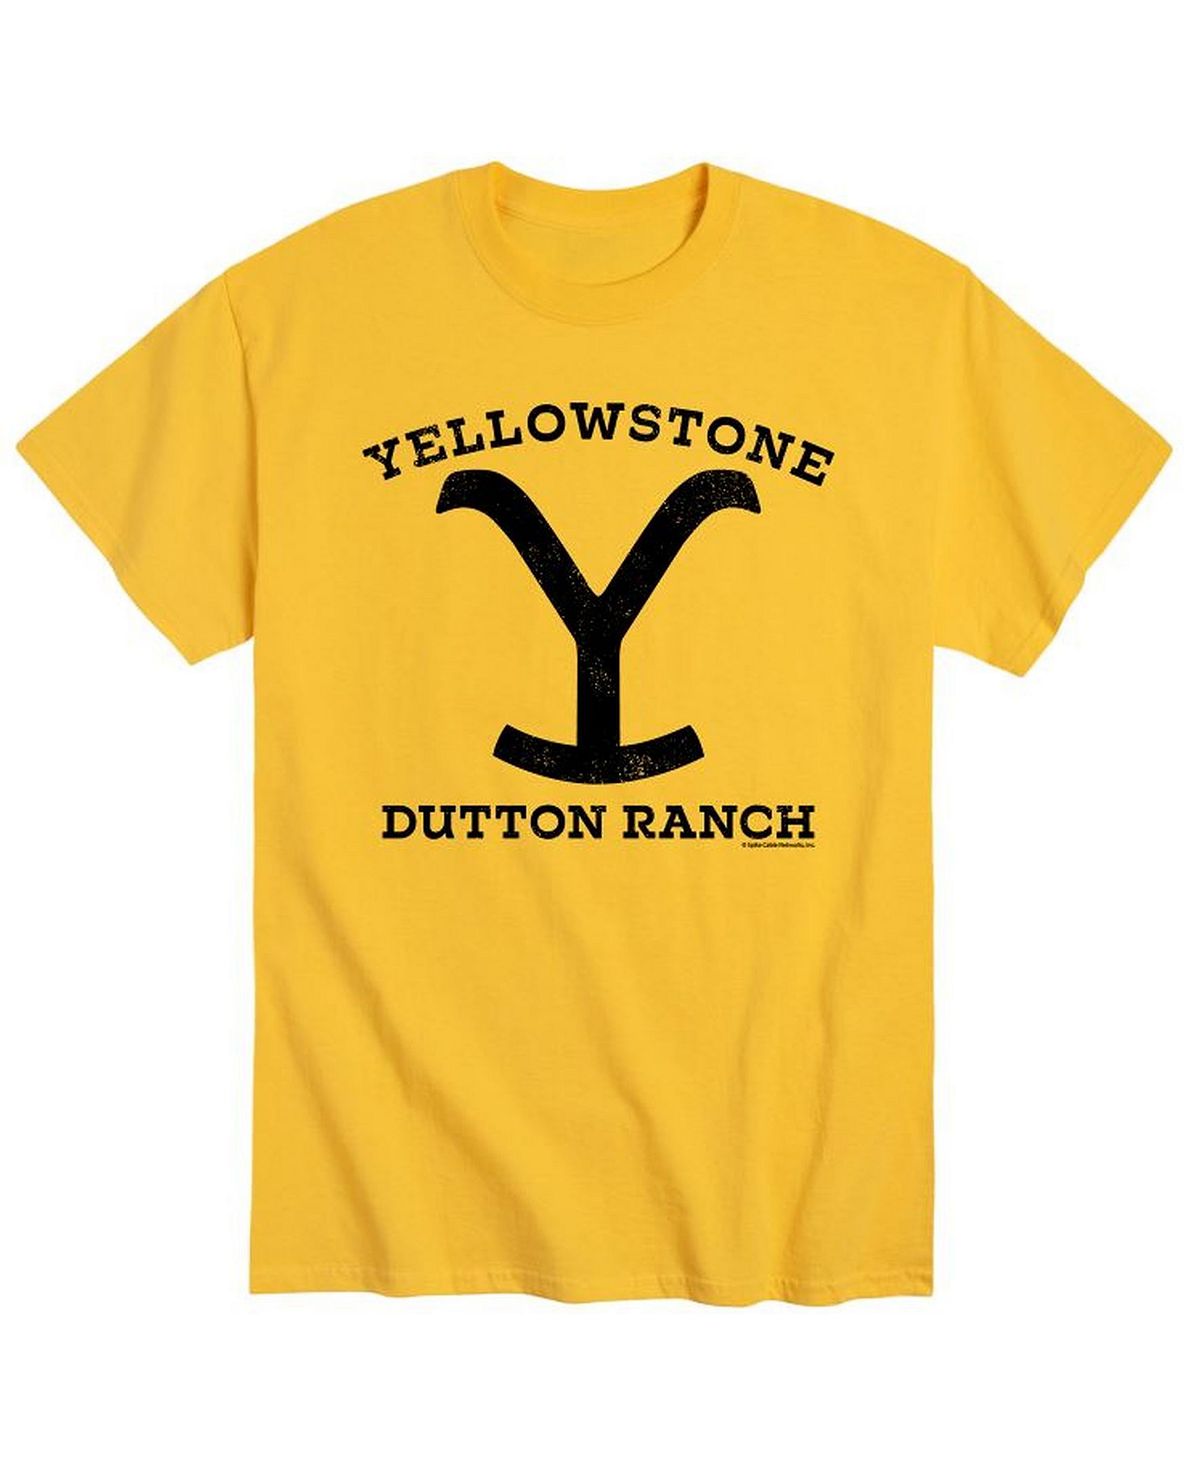 Мужская футболка yellowstone dutton ranch AIRWAVES